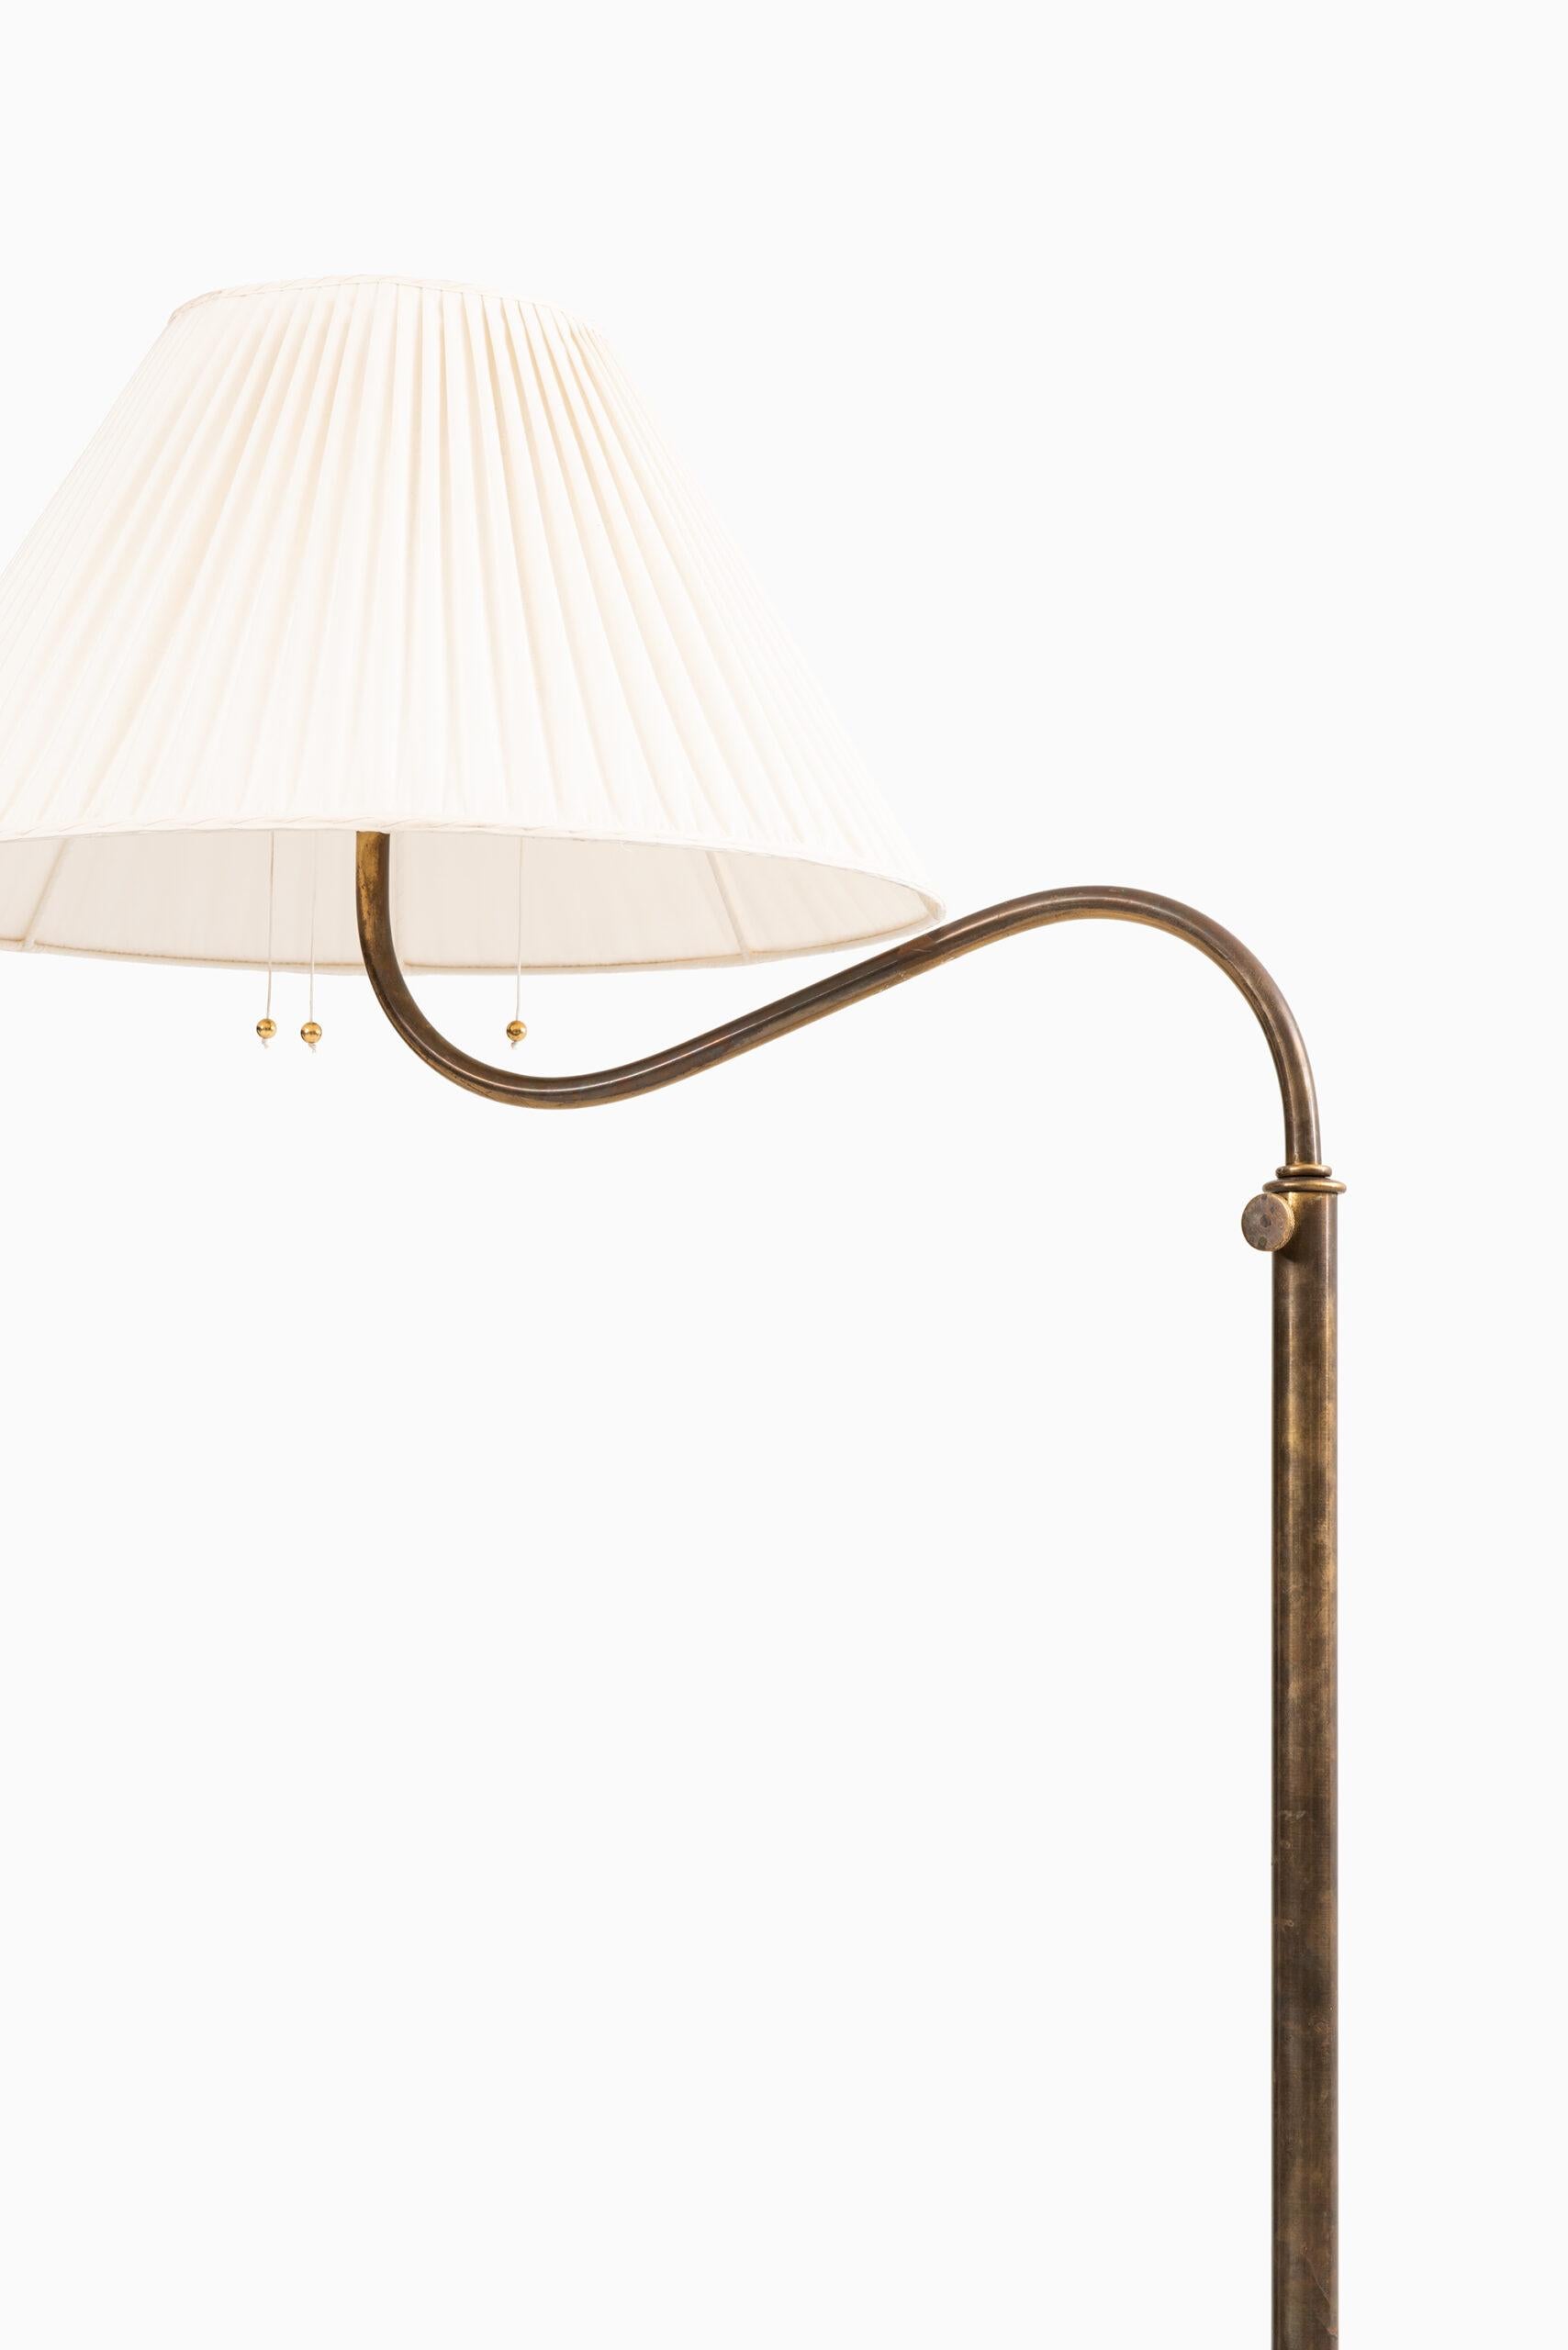 Rare height adjustable floor lamp designed by Josef Frank. Produced by Svenskt Tenn in Sweden.